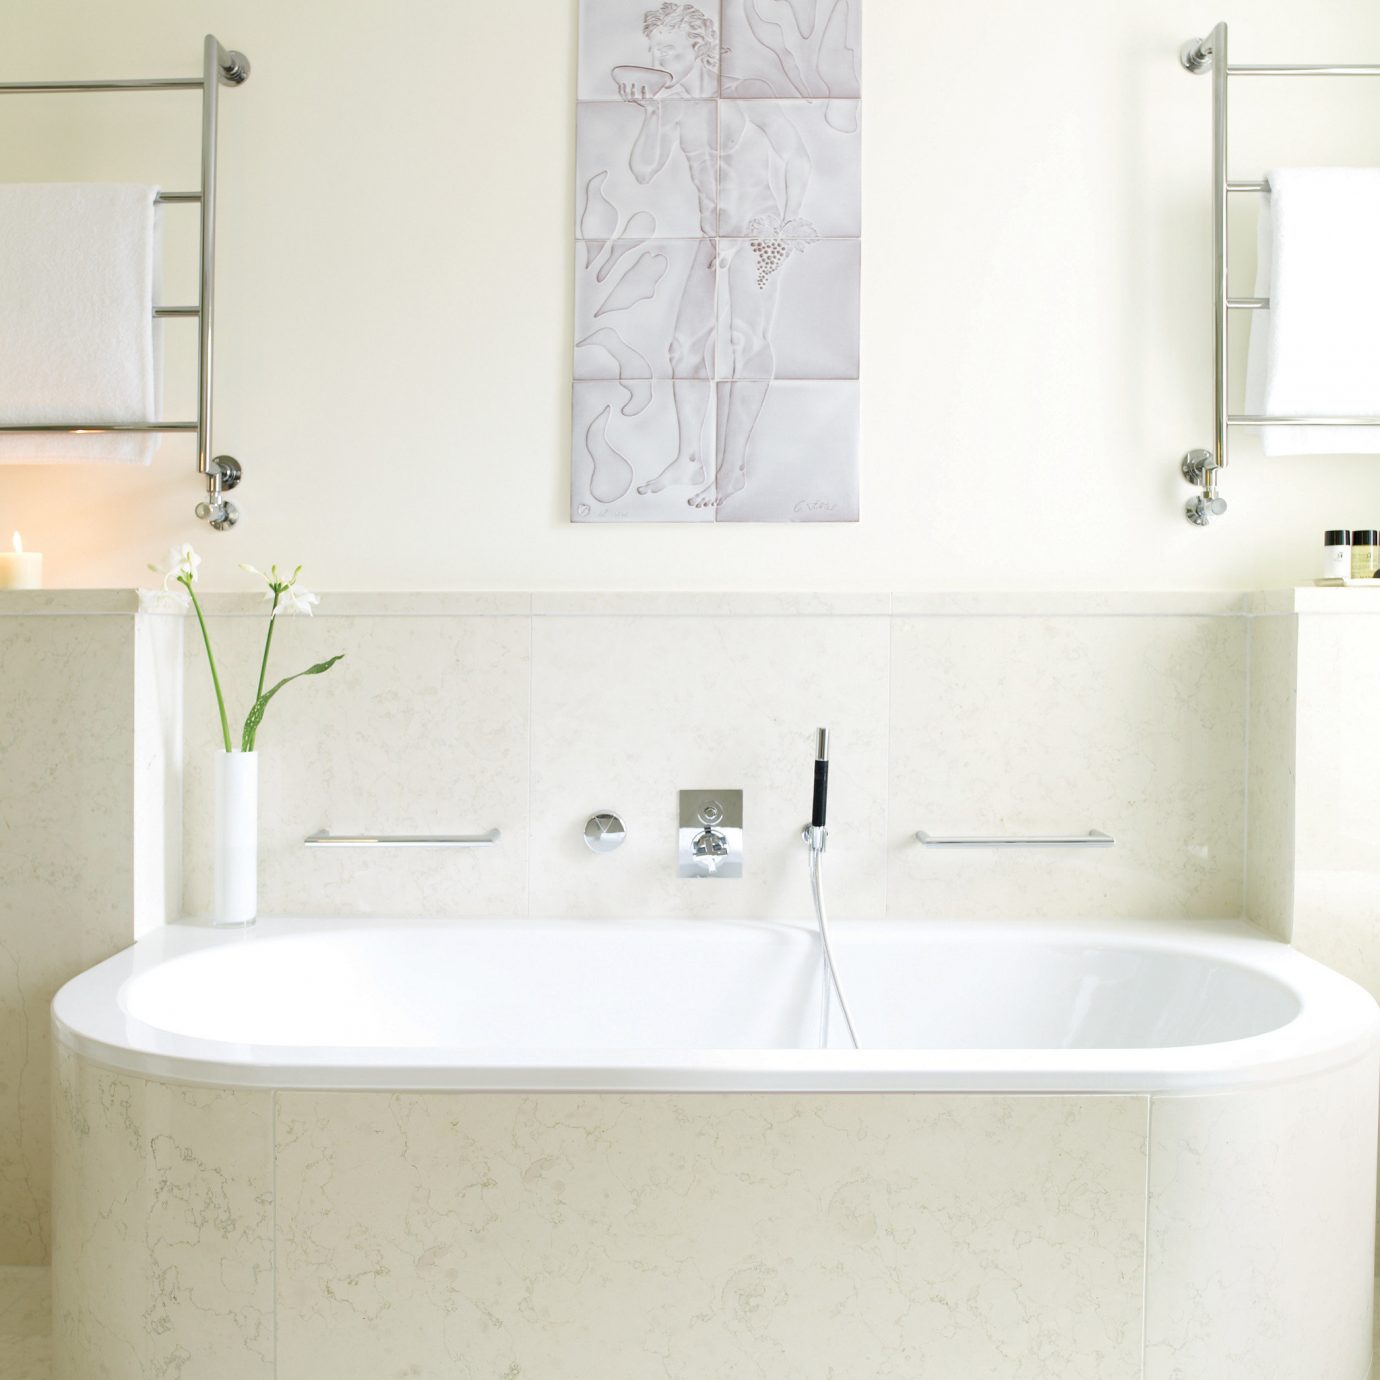 bathroom white vessel bathtub plumbing fixture bidet toilet sink bathroom cabinet tub flooring Bath tile water basin tiled